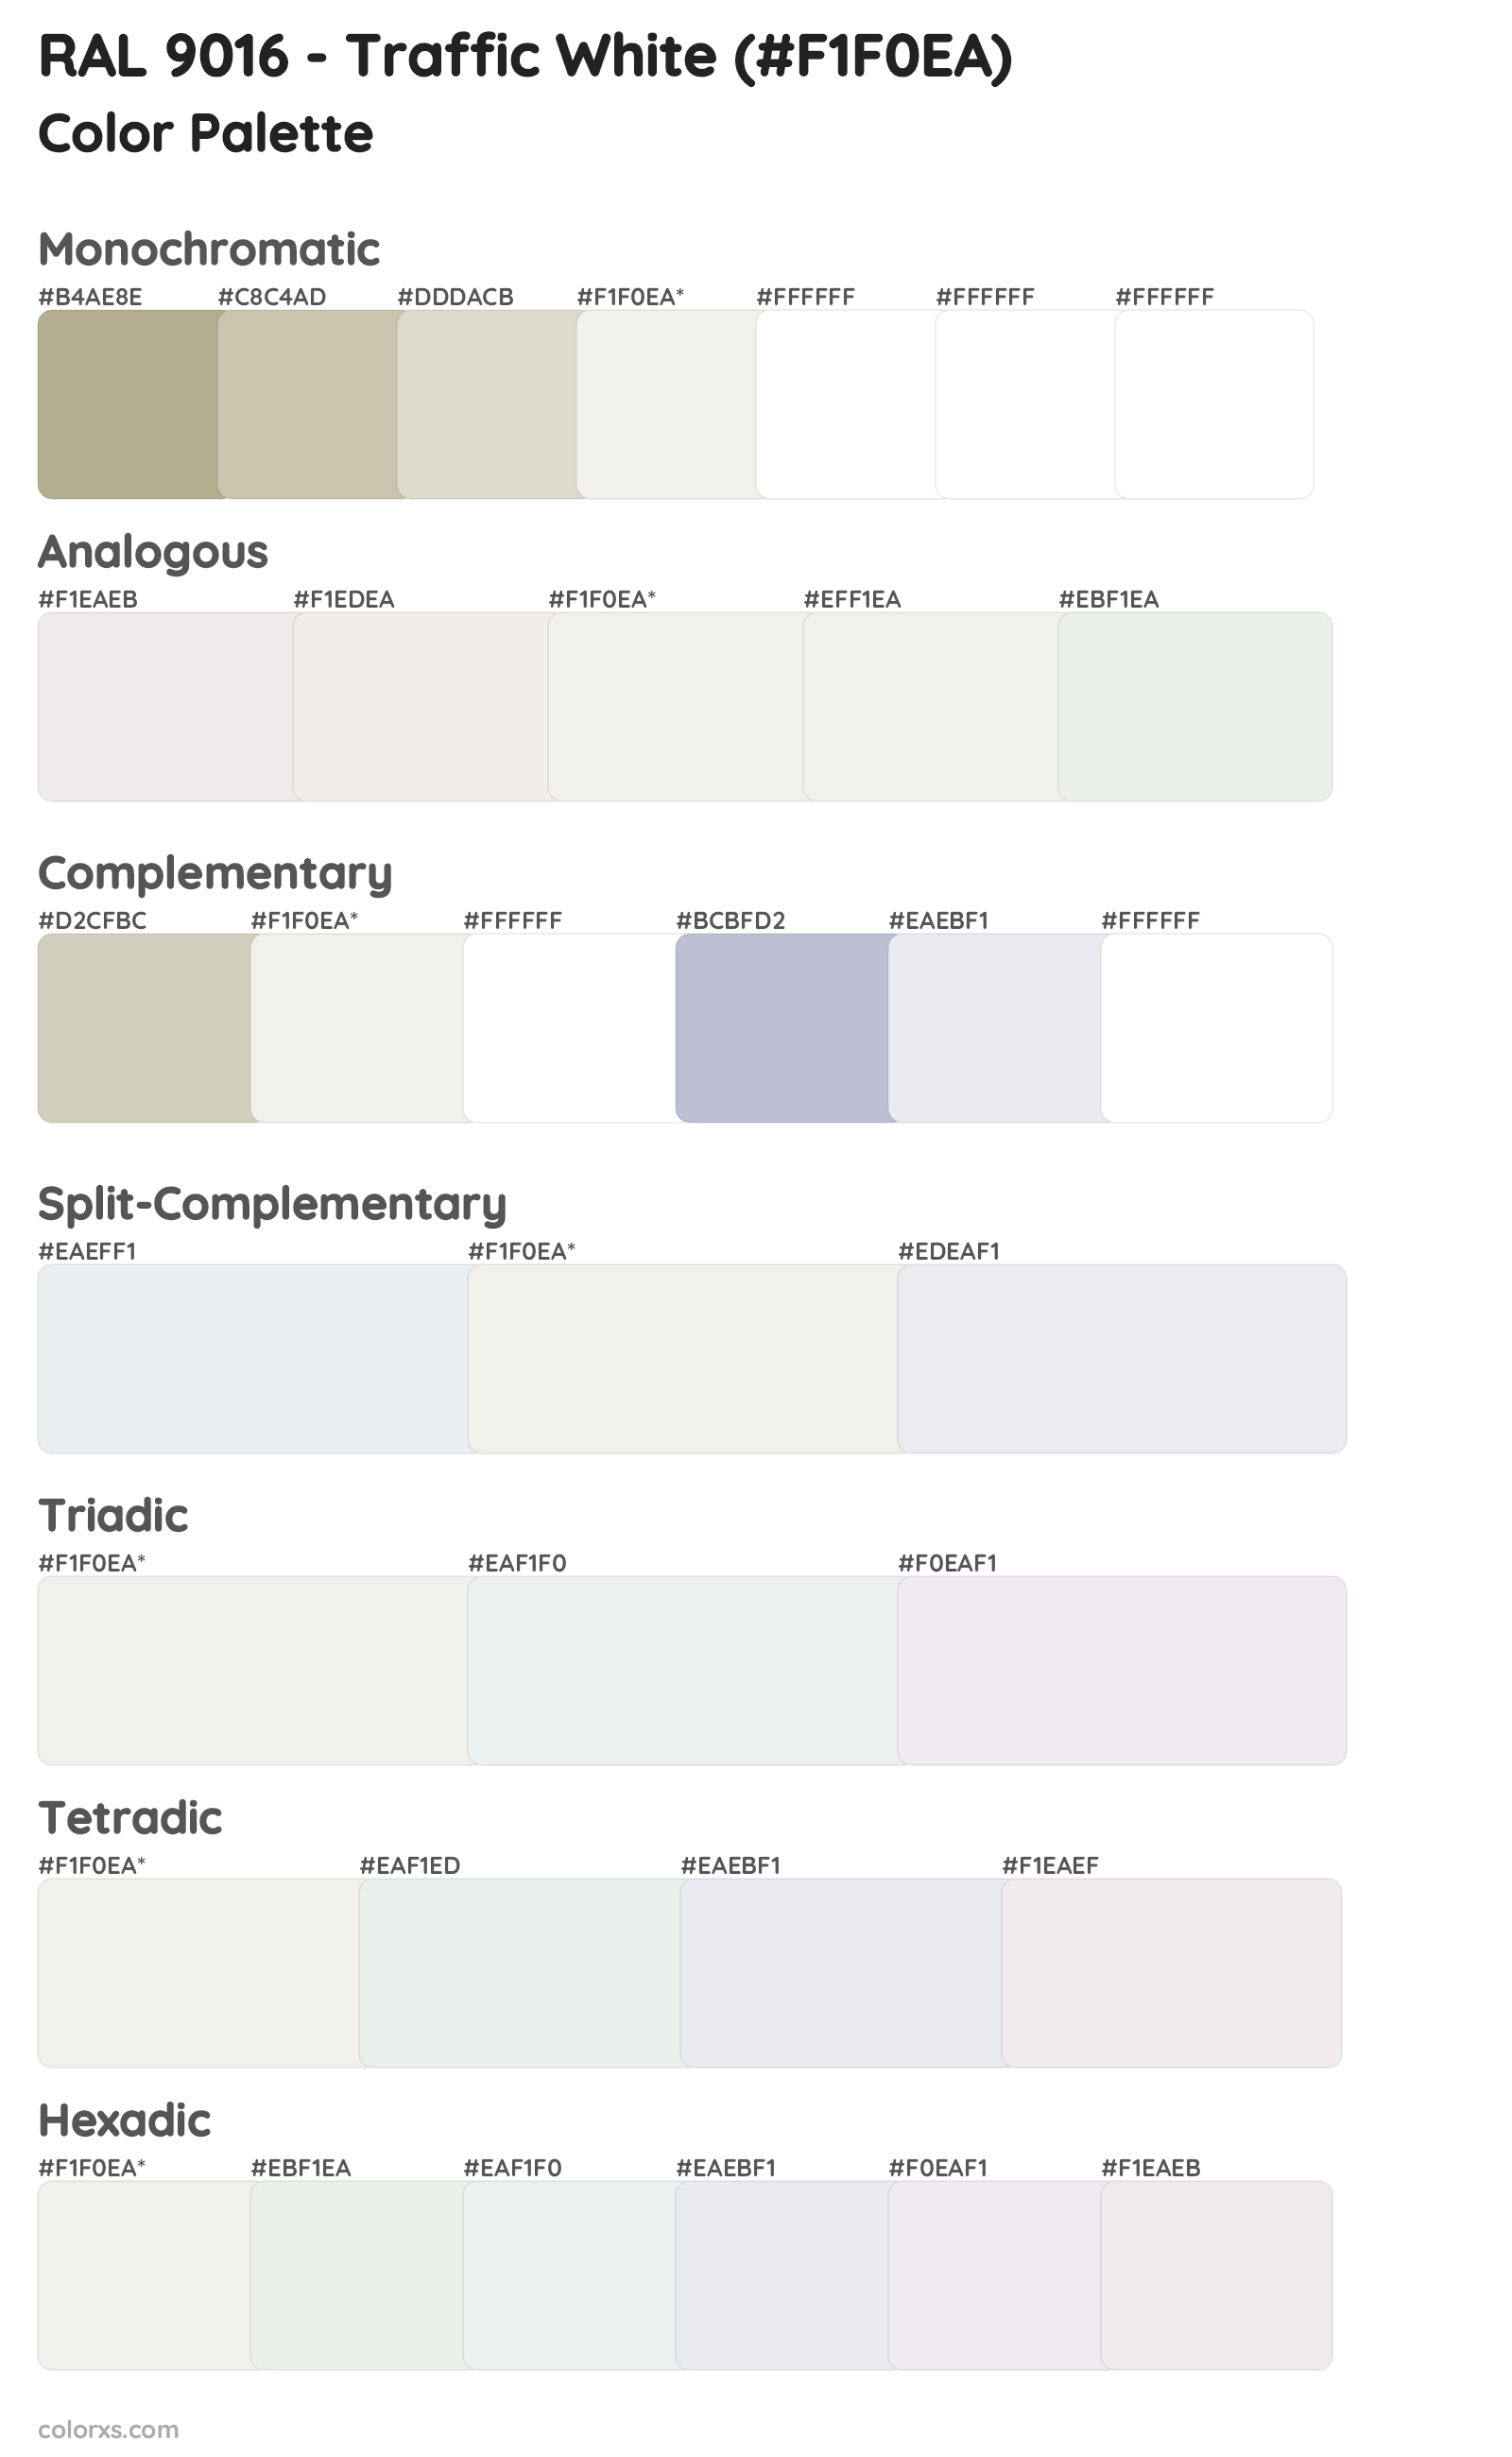 RAL 9016 - Traffic White Color Scheme Palettes